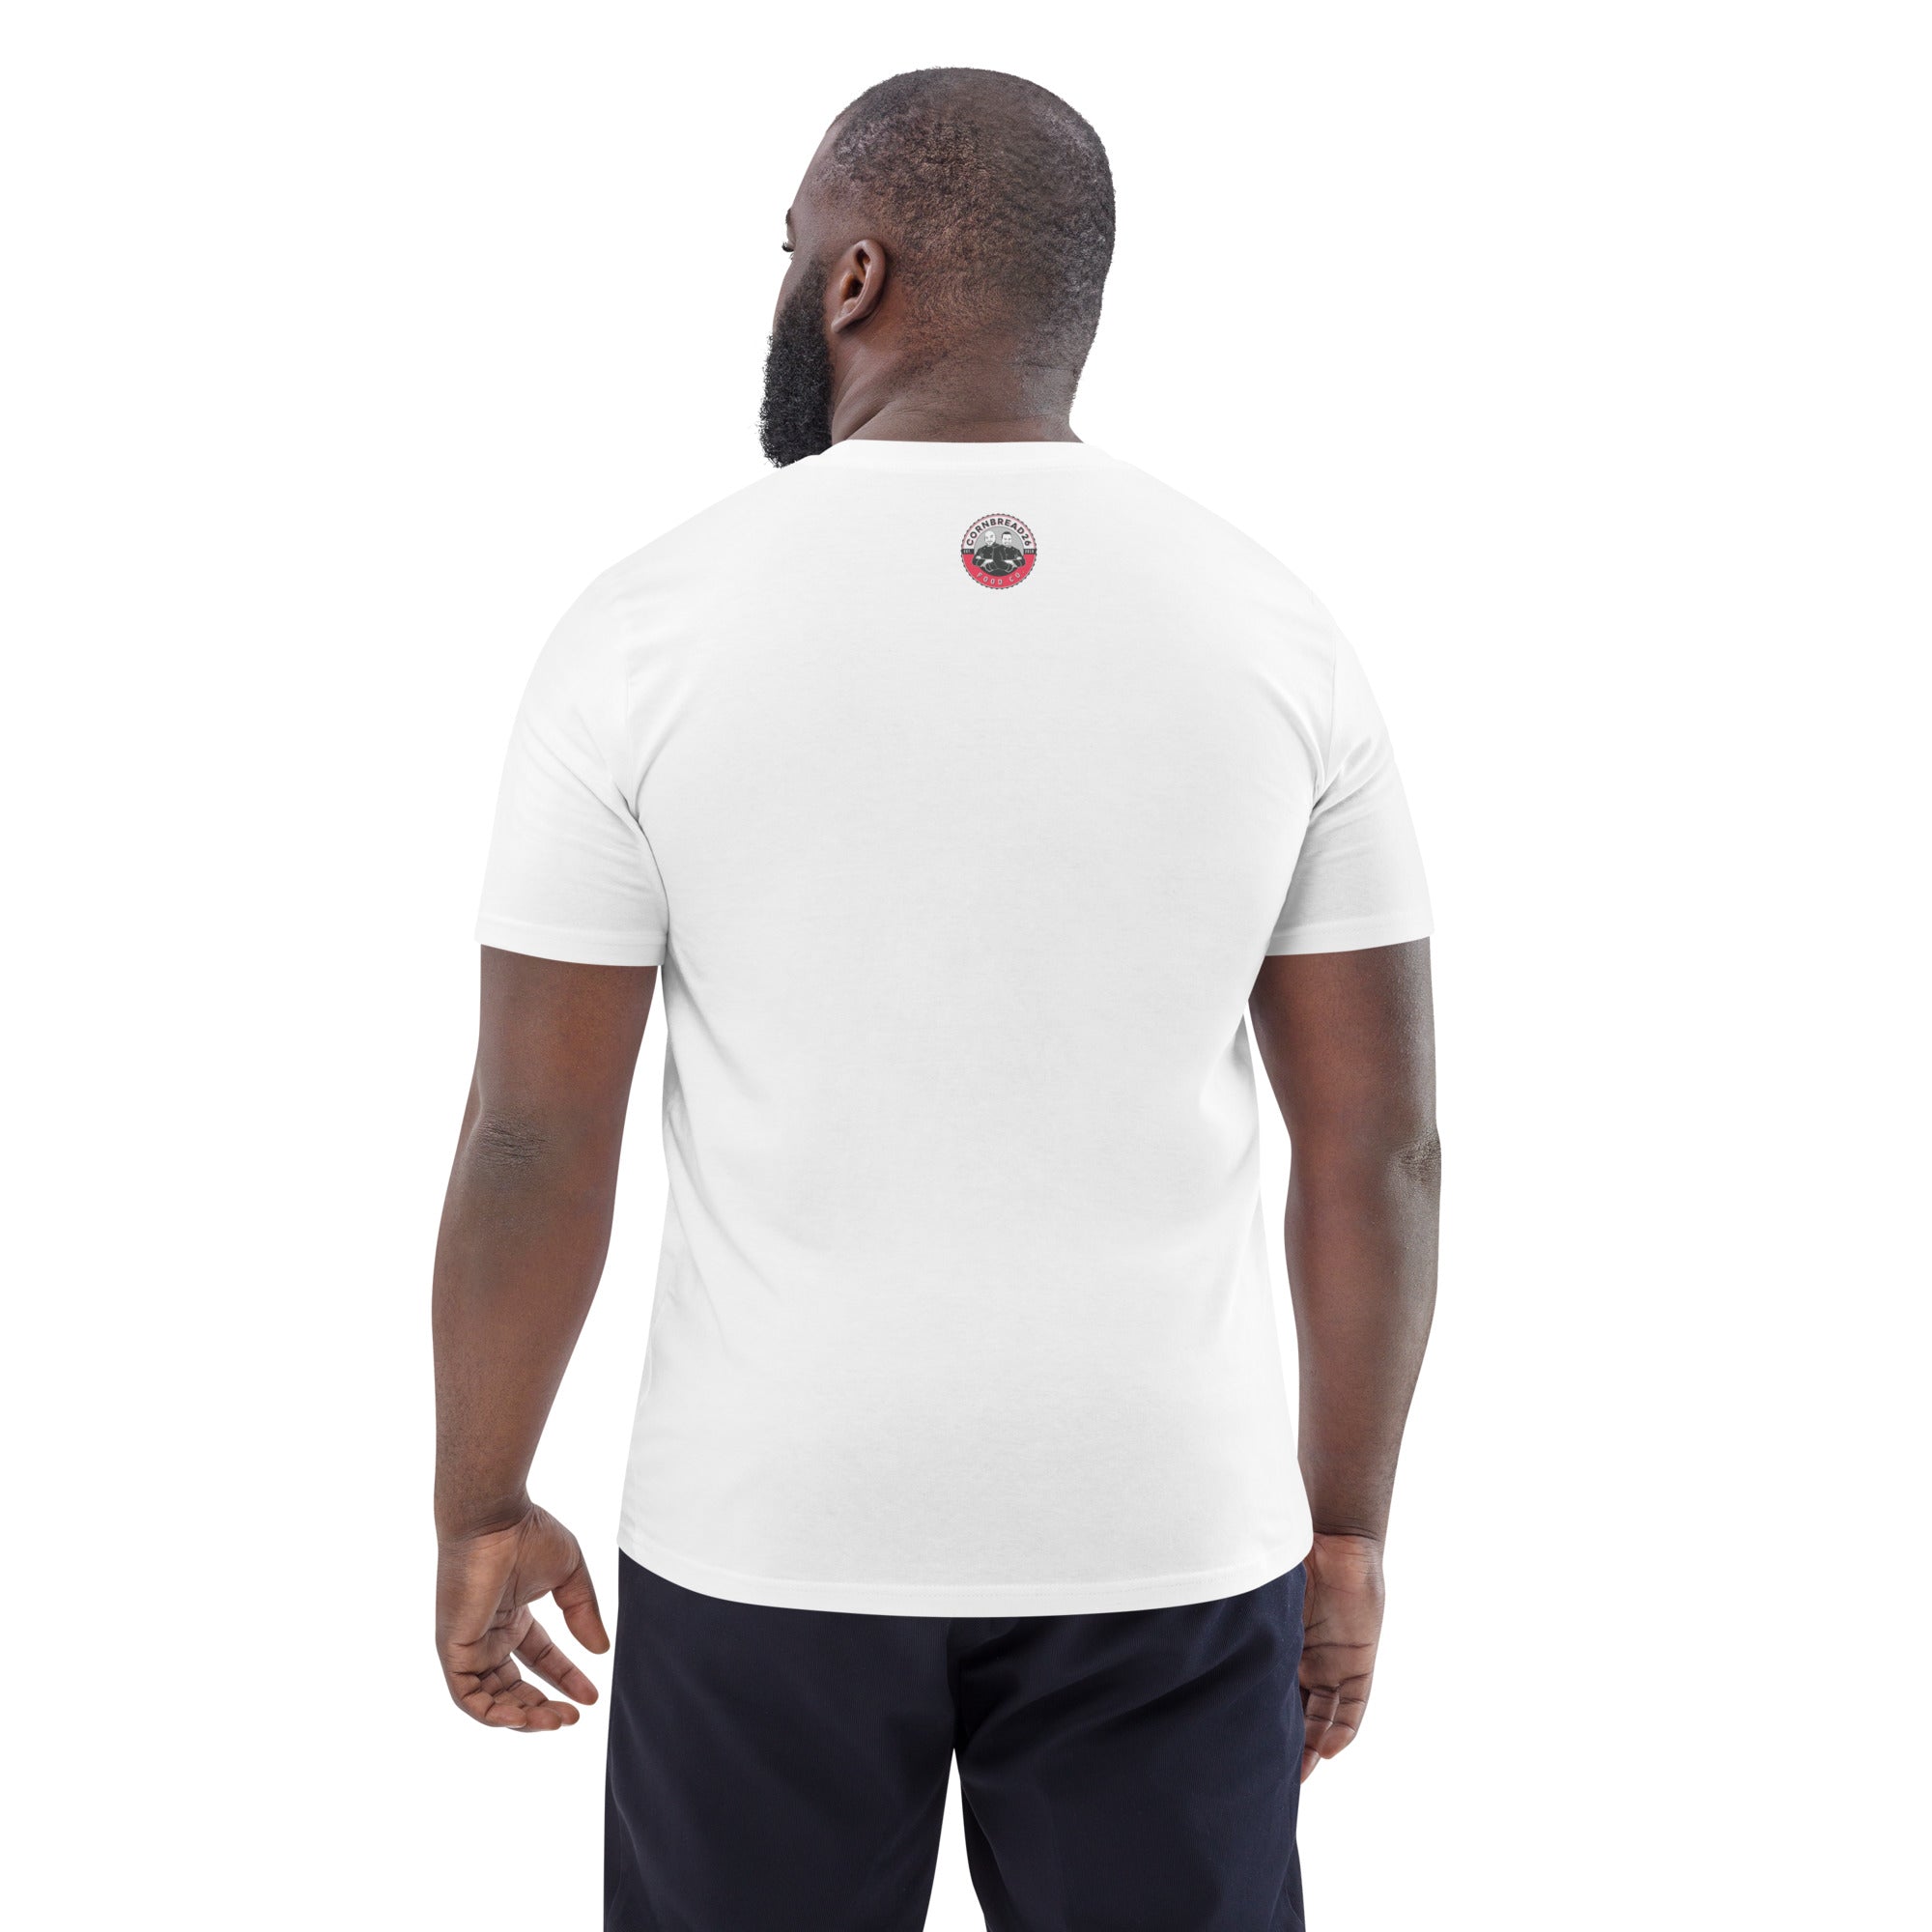 Unisex "26" Organic Cotton T-Shirt - THE CORNBREAD KITCHEN SHOP